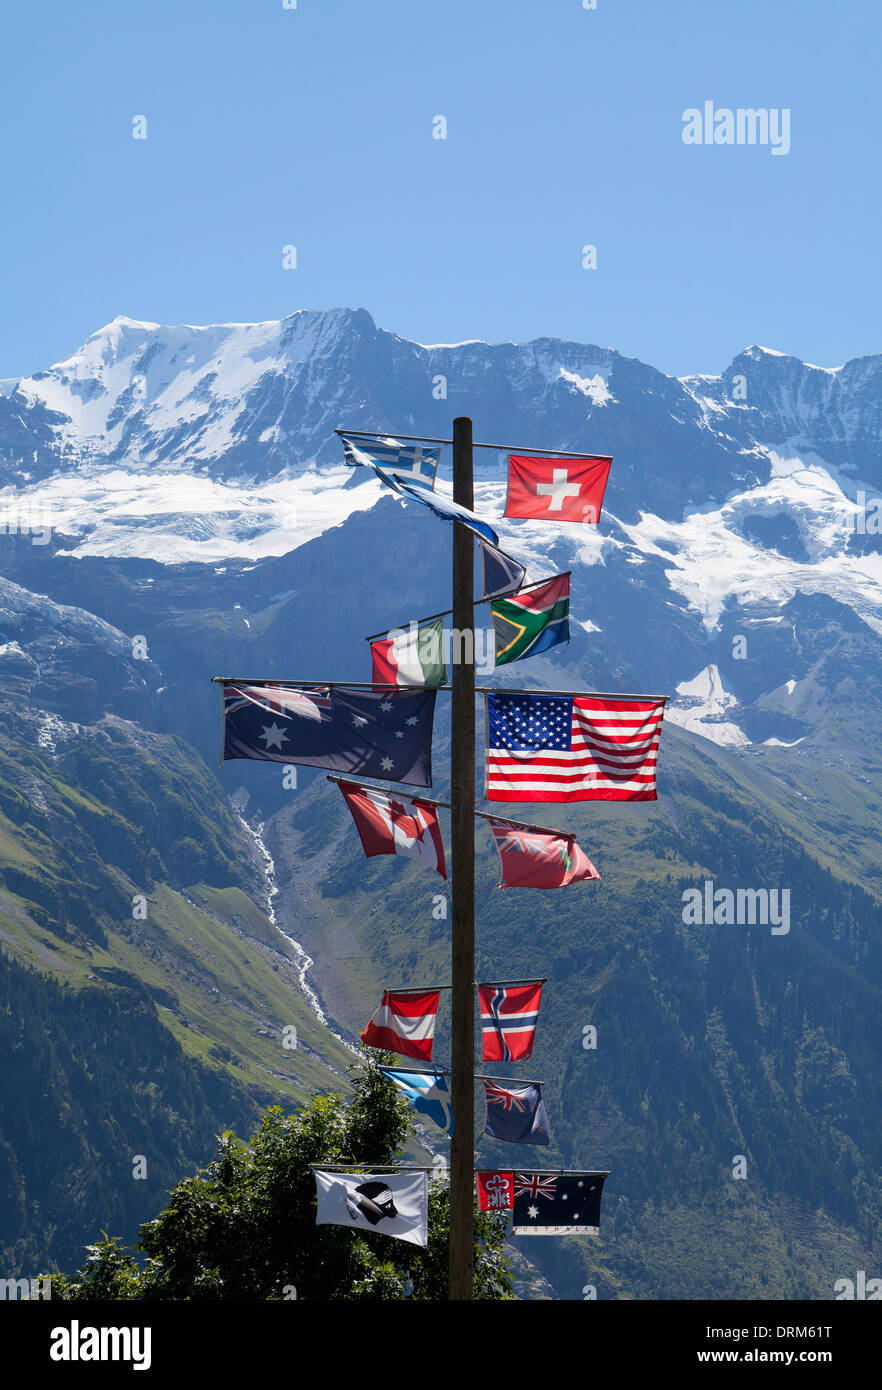 Switzerland, Grimmelwald, Inernational flag pole at Jungfrau-Aletsch-Bietschhorn nature heritage site Stock Photo